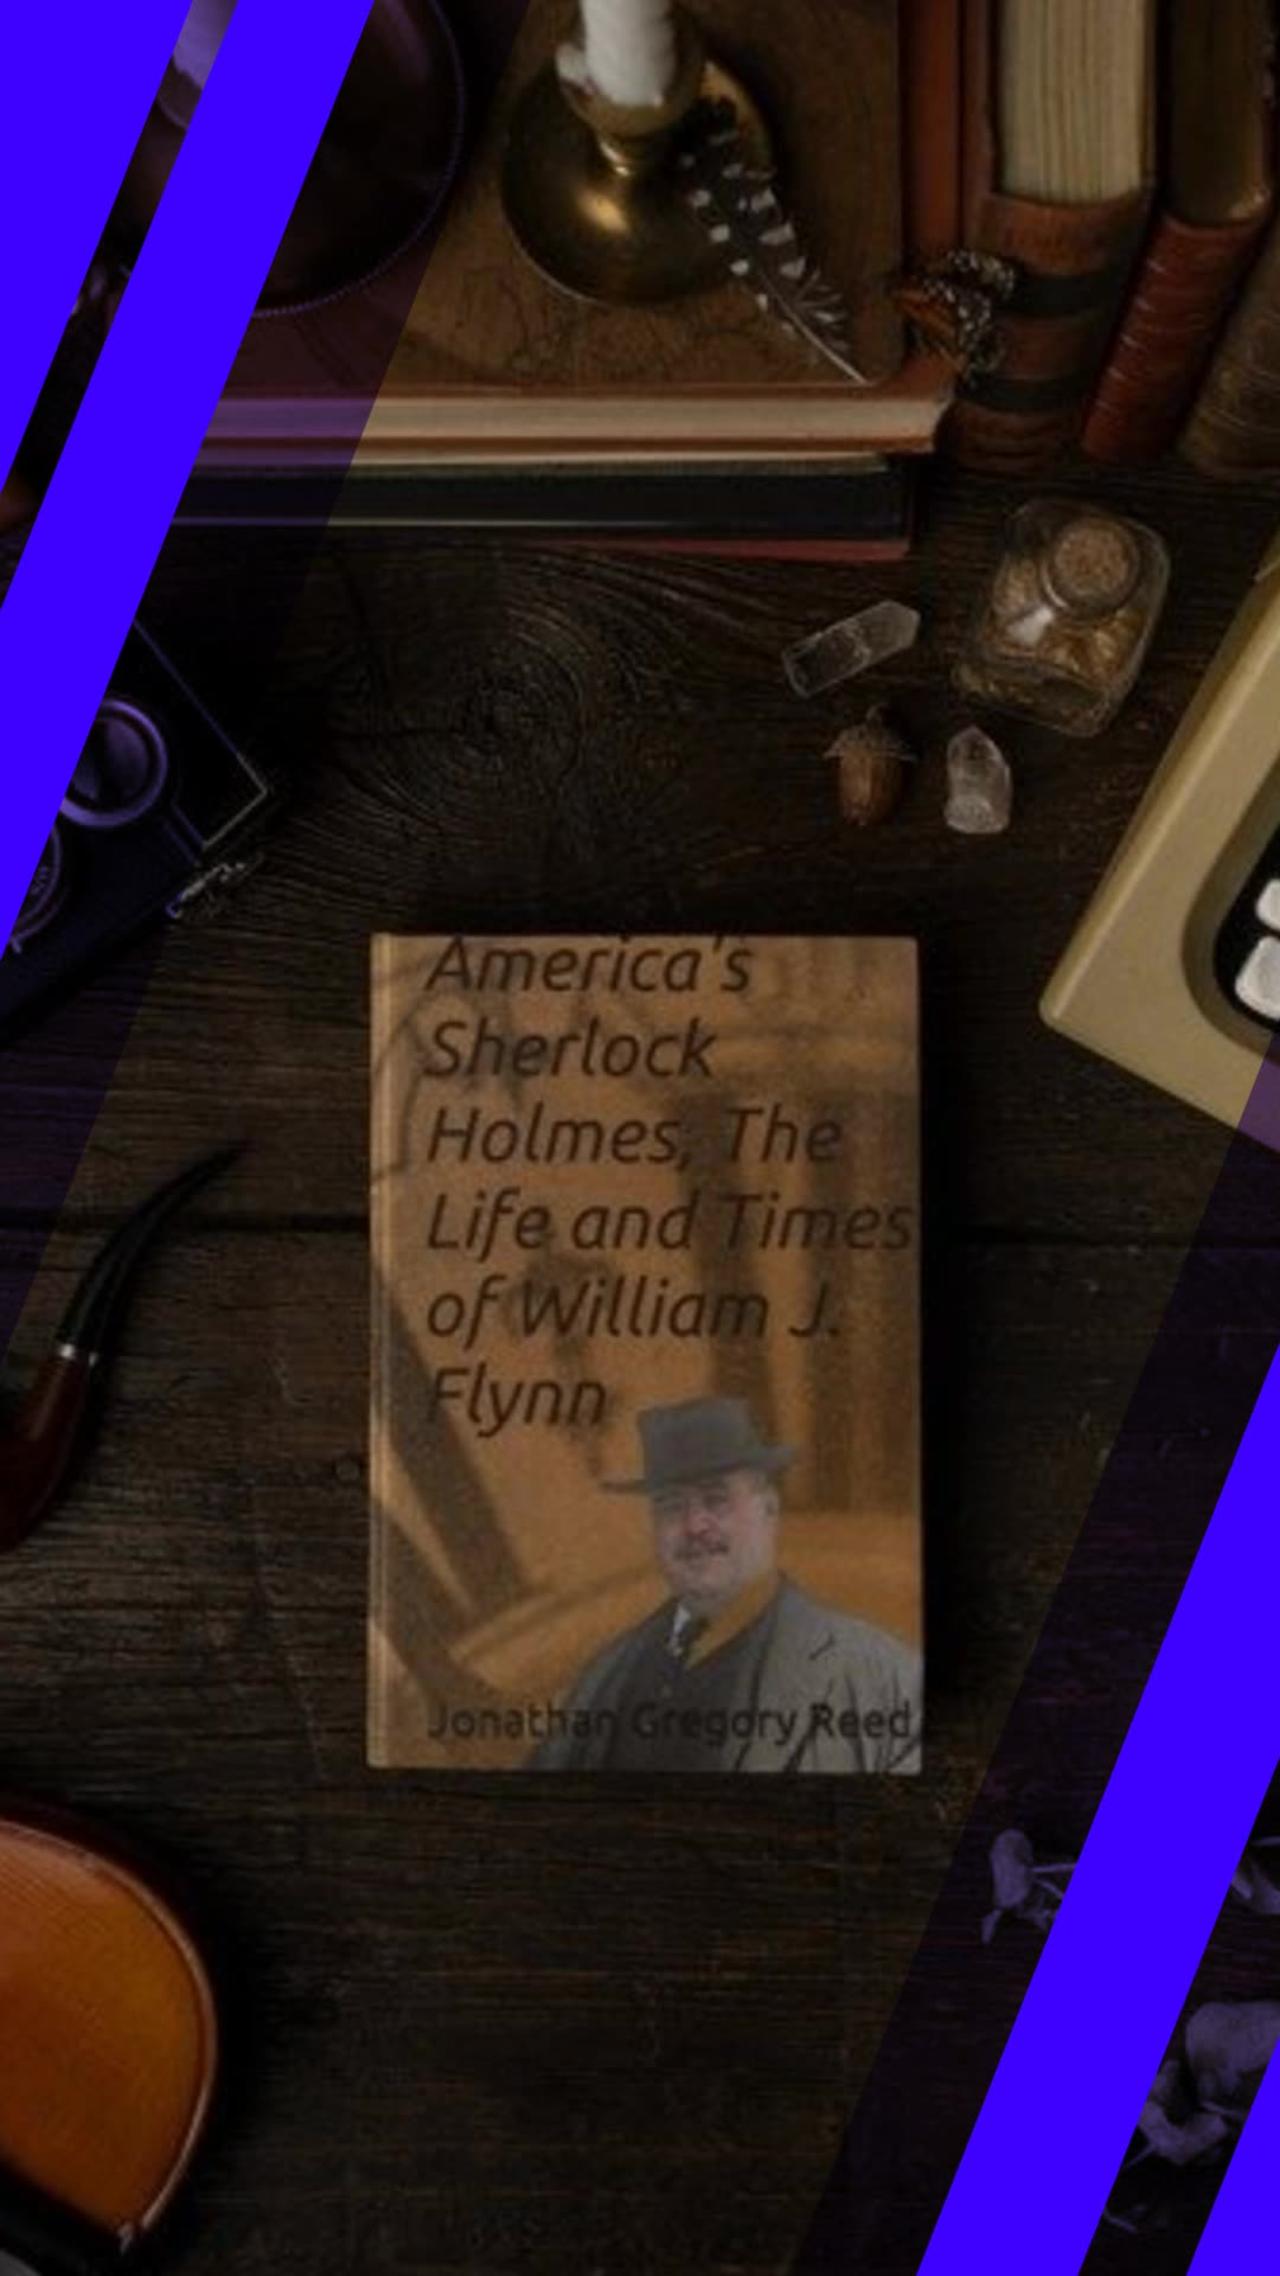 Jonathan Gregory Reed's America's Sherlock Holmes